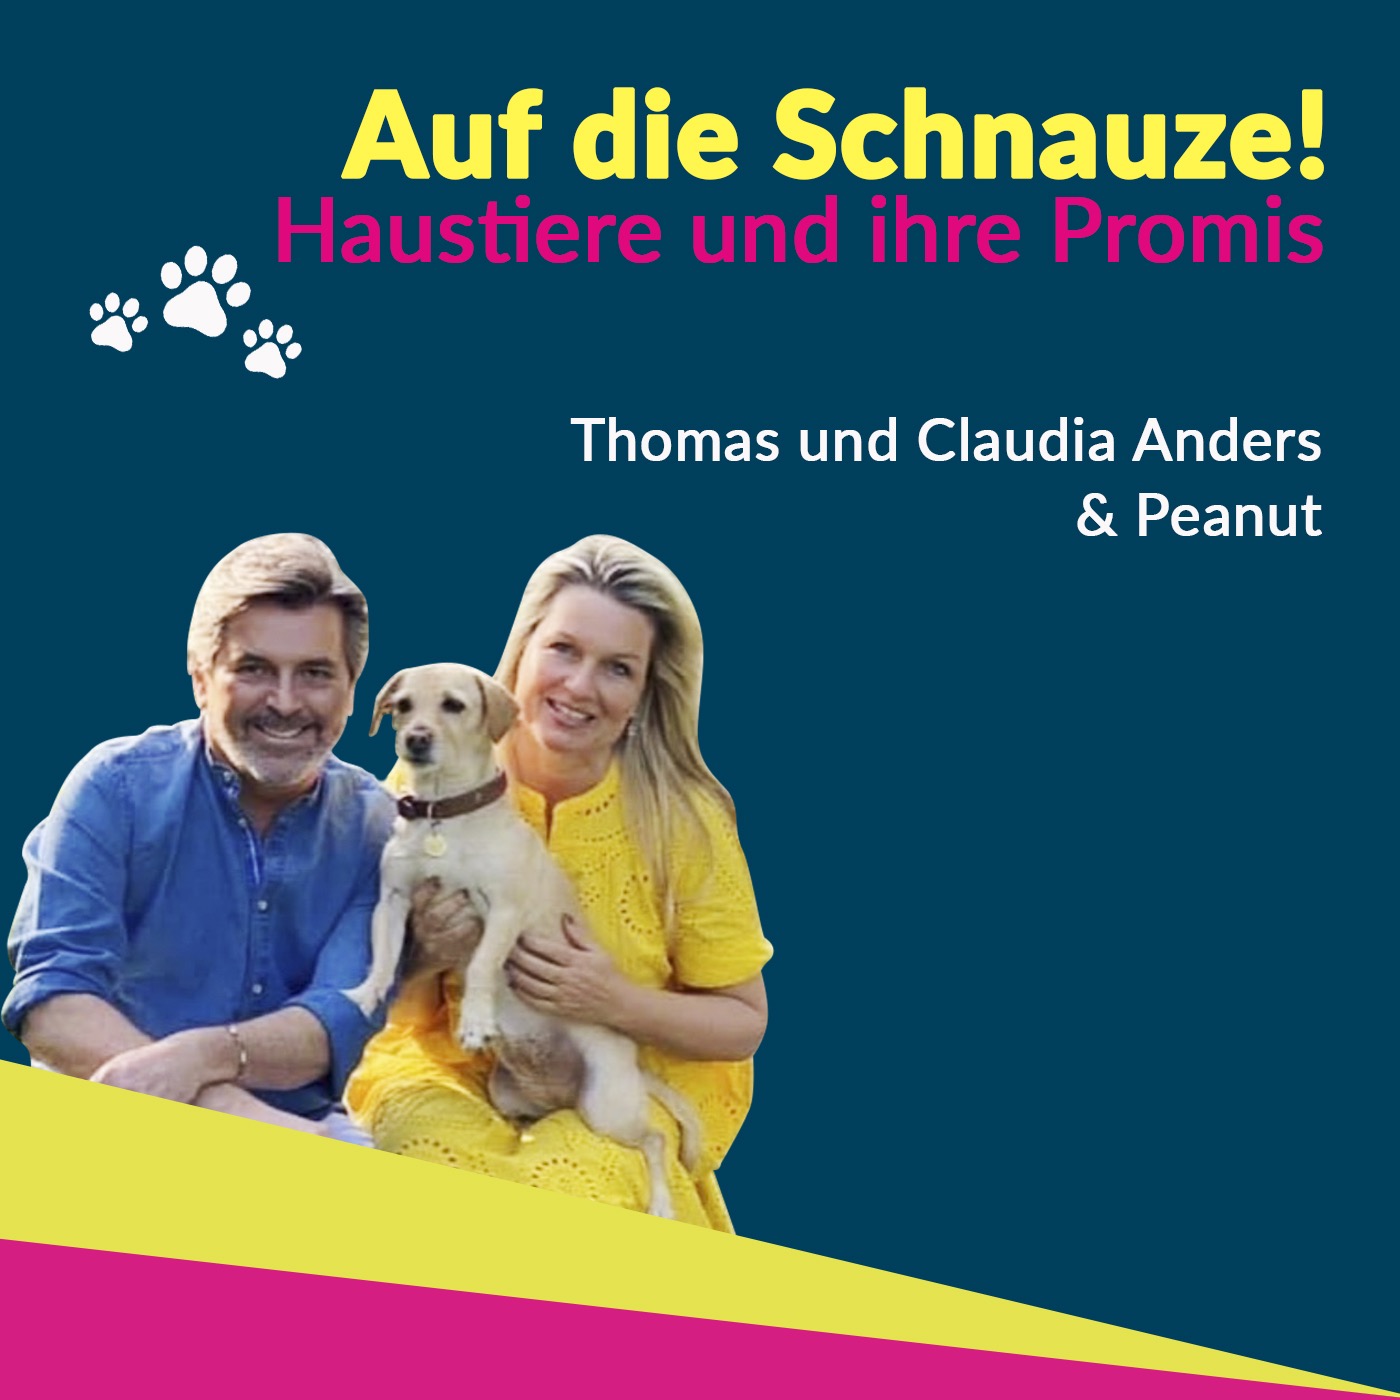 Claudia & Thomas Anders - it comes naturally!